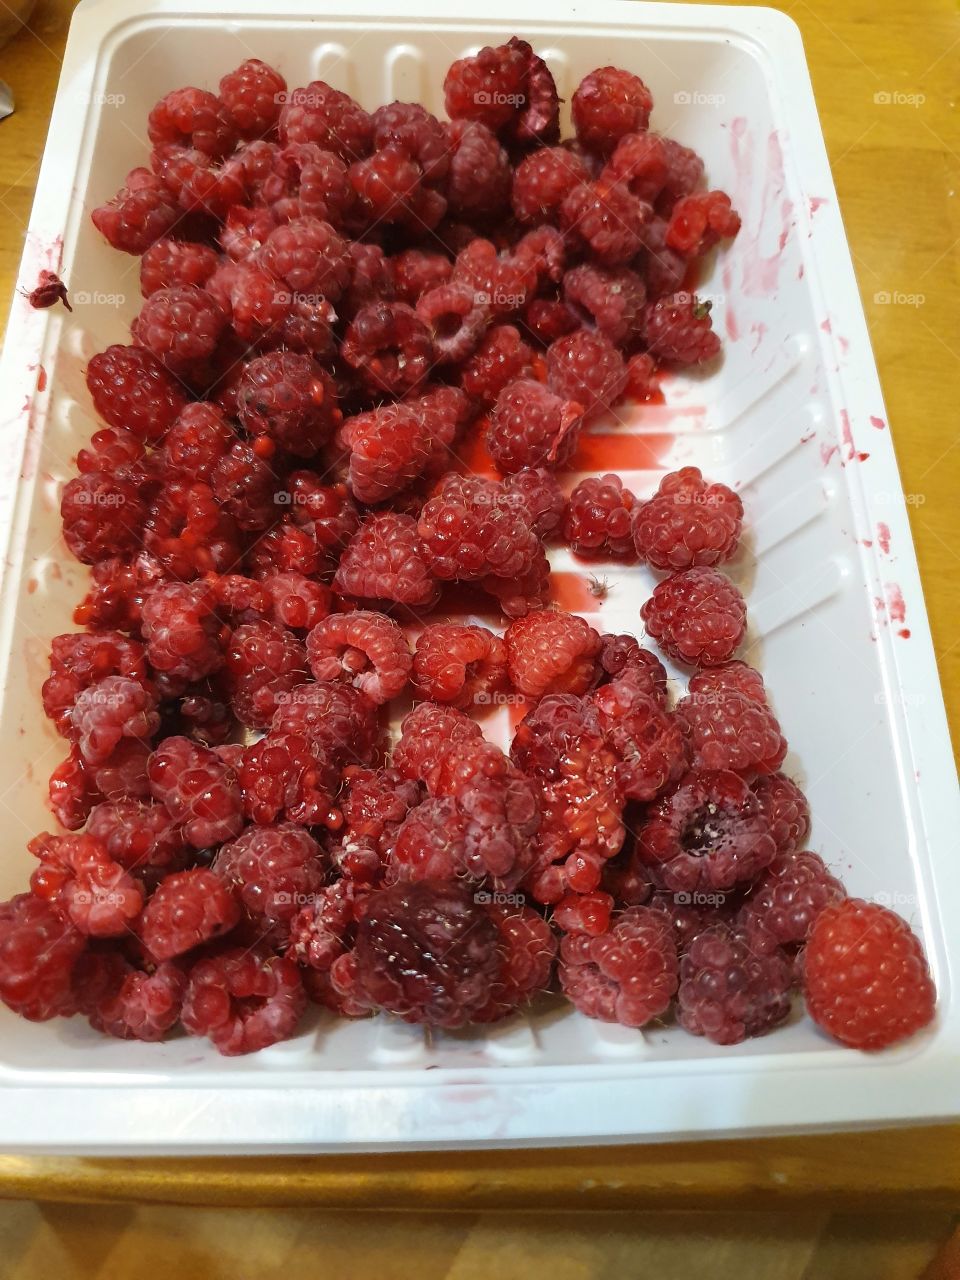 raspberries half eaten in the tray